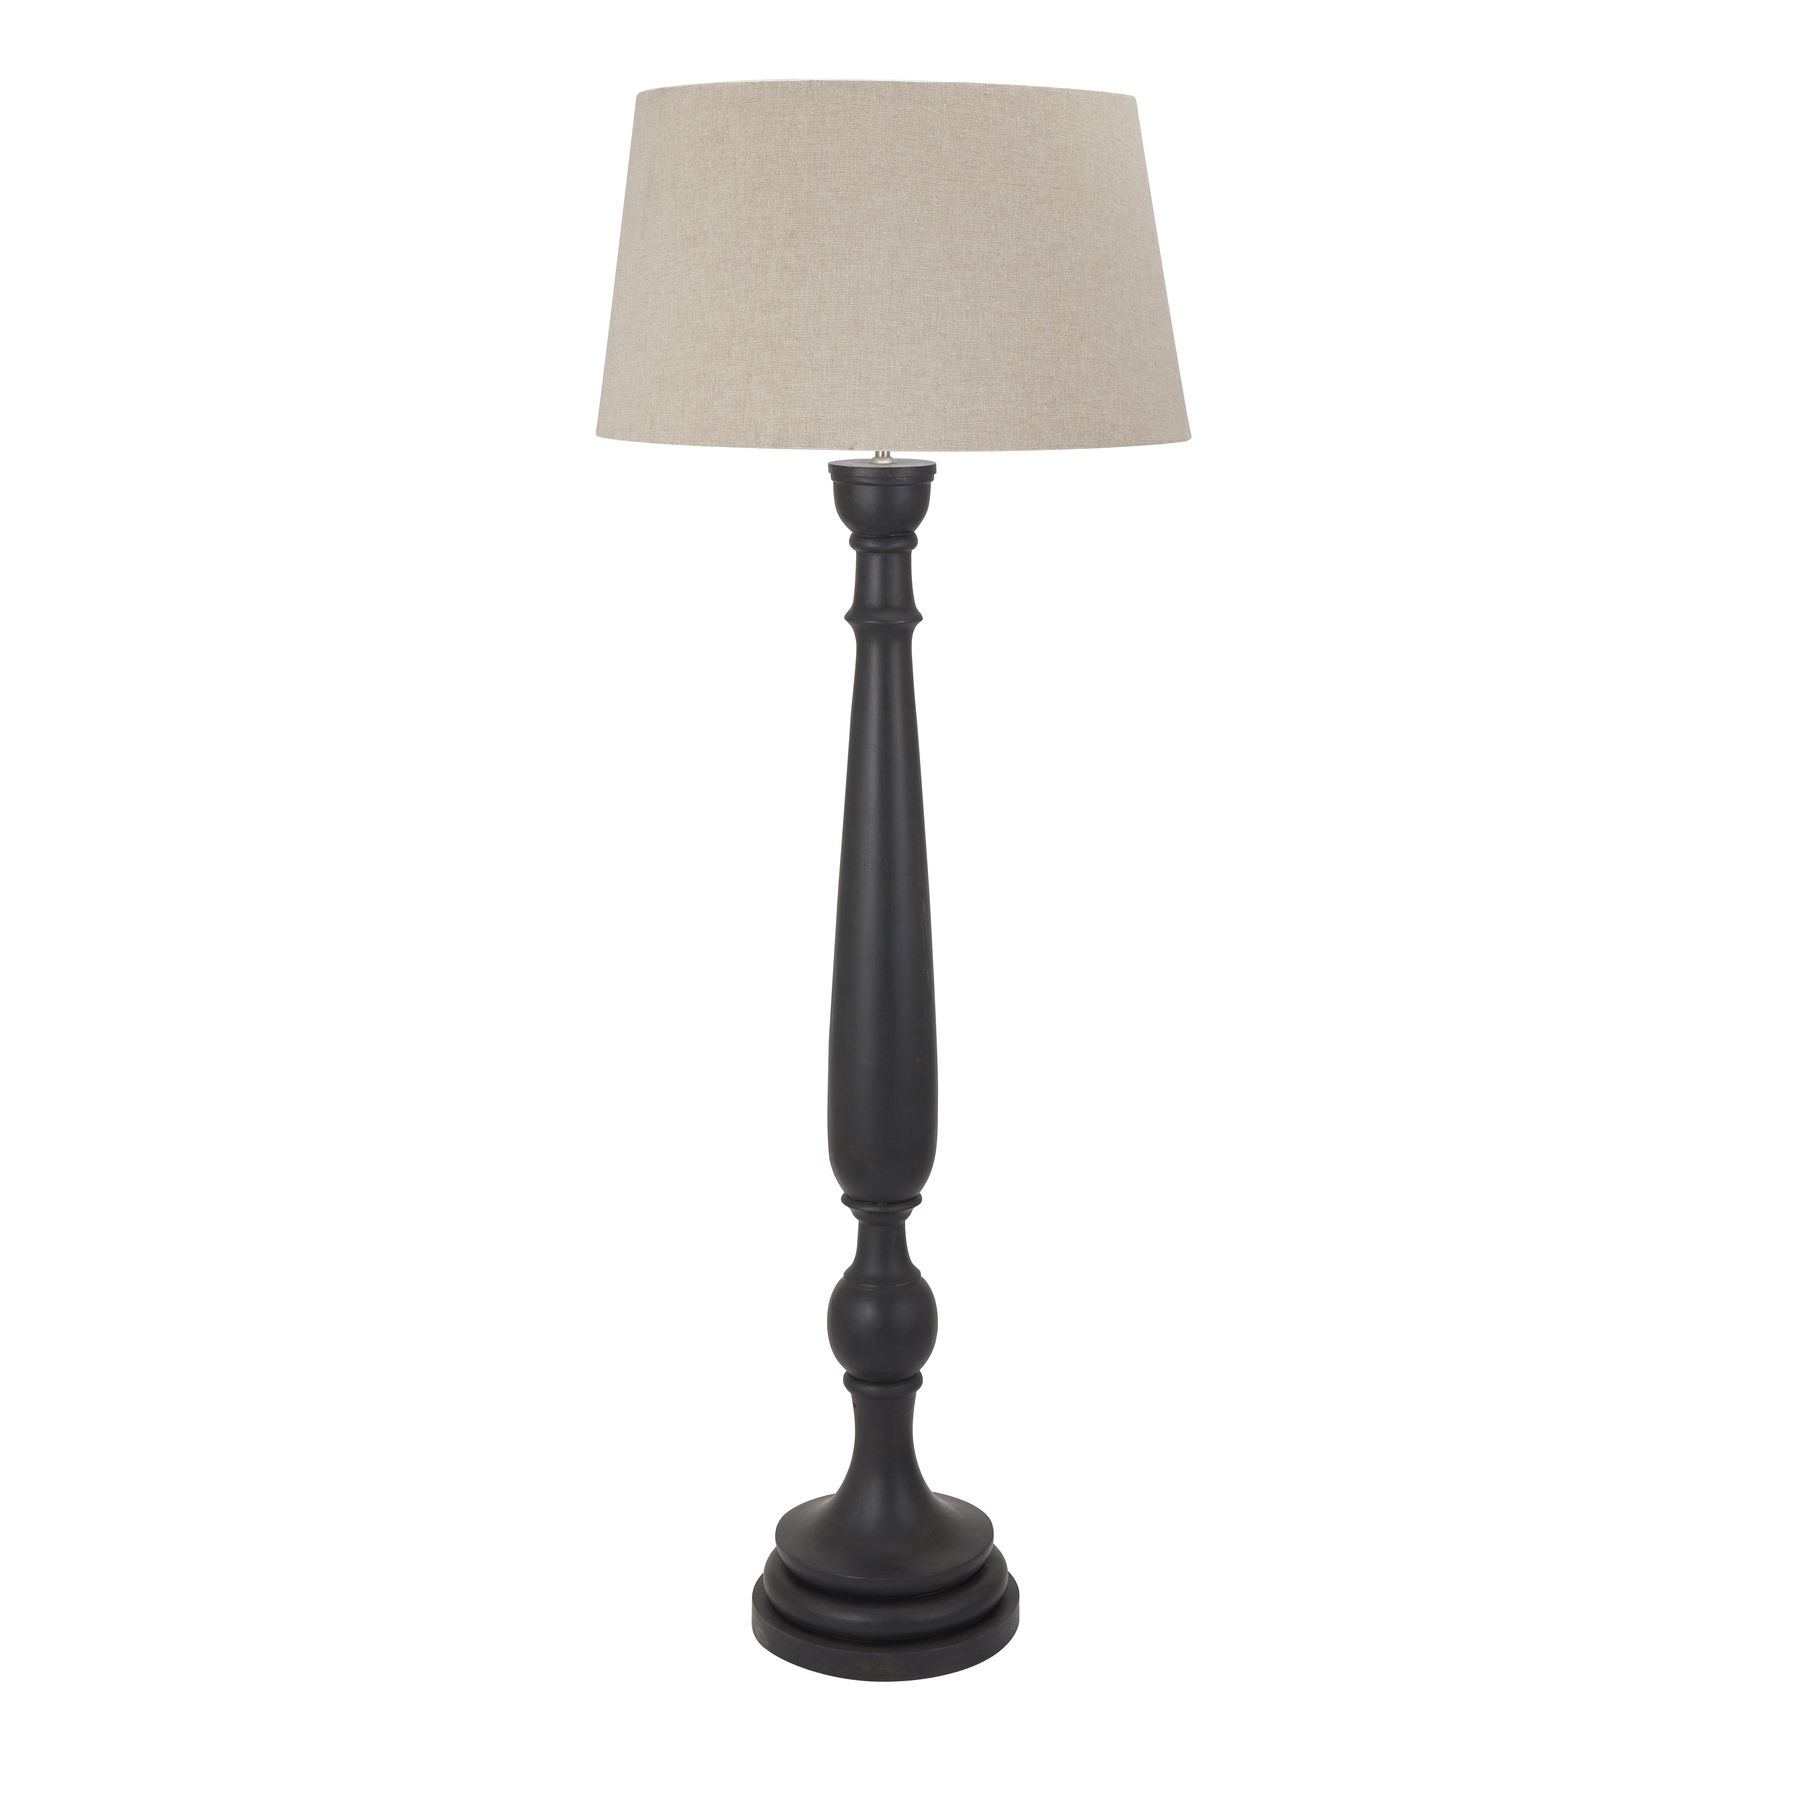 Delaney Grey Droplet Floor Lamp With Linen Shade - Image 1